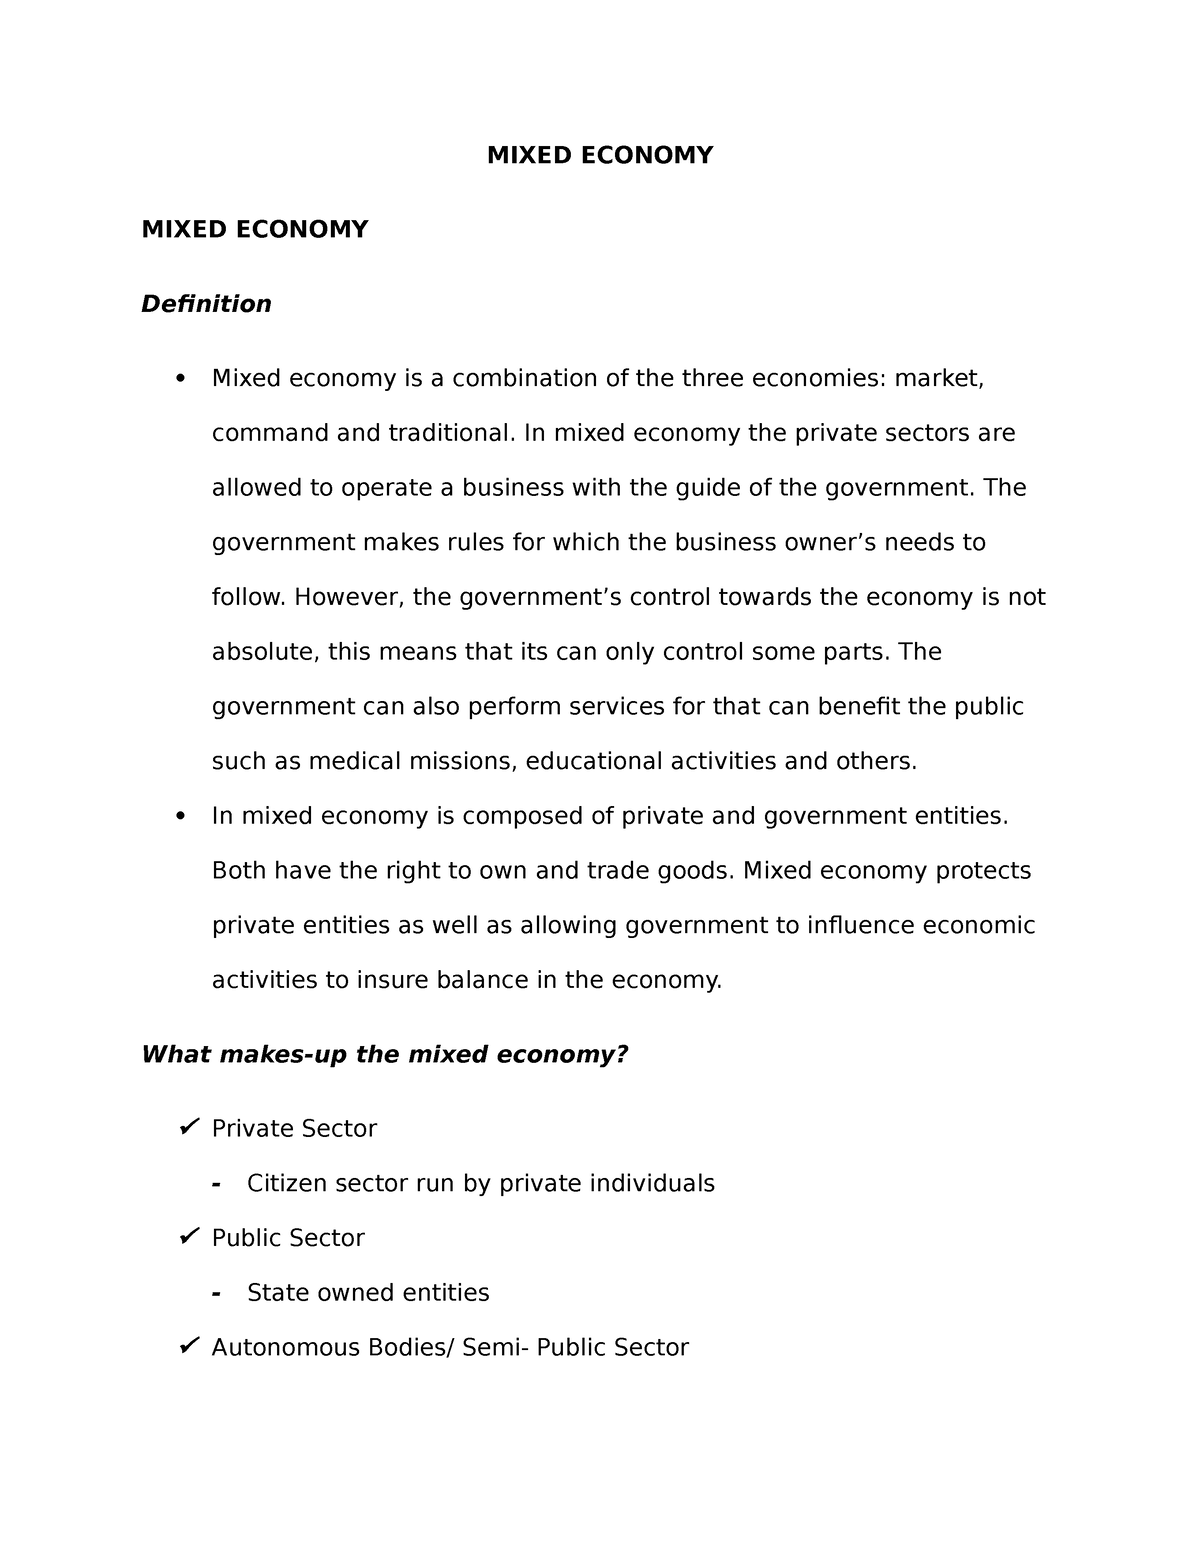 mixed economic system essay